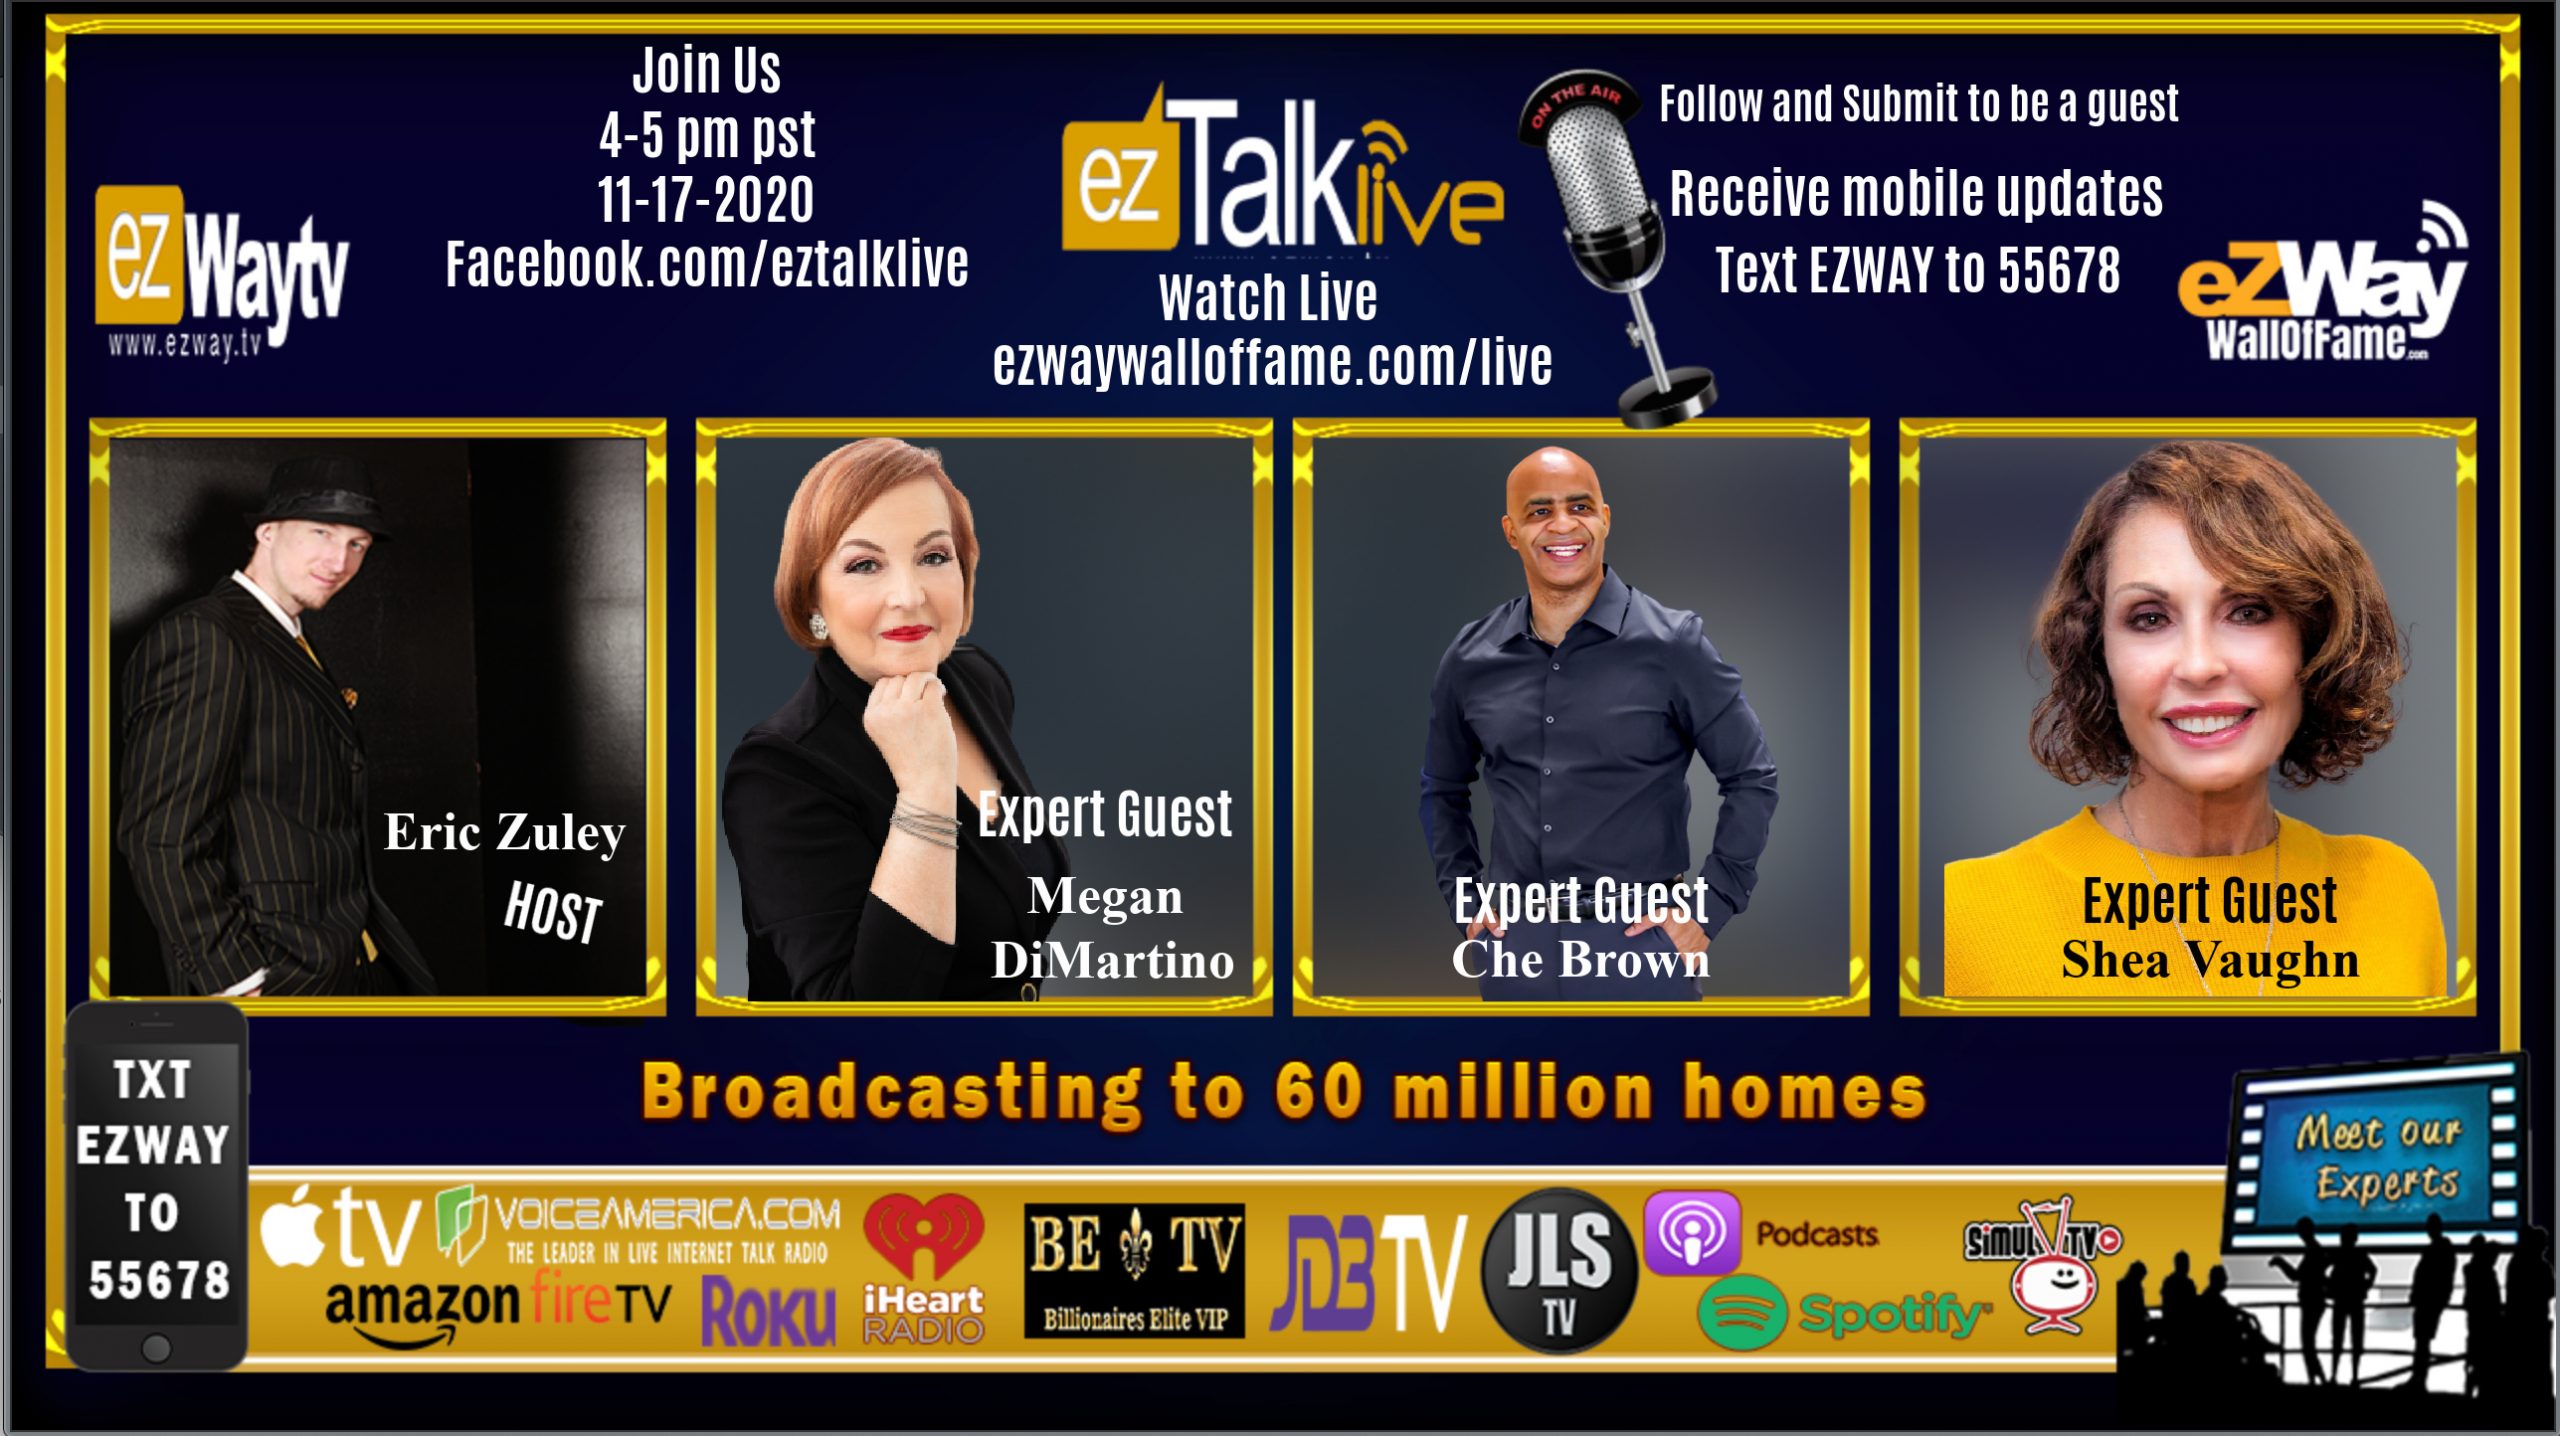 EZ TALK LIVE Talk show Episode Live on 11-17-2020